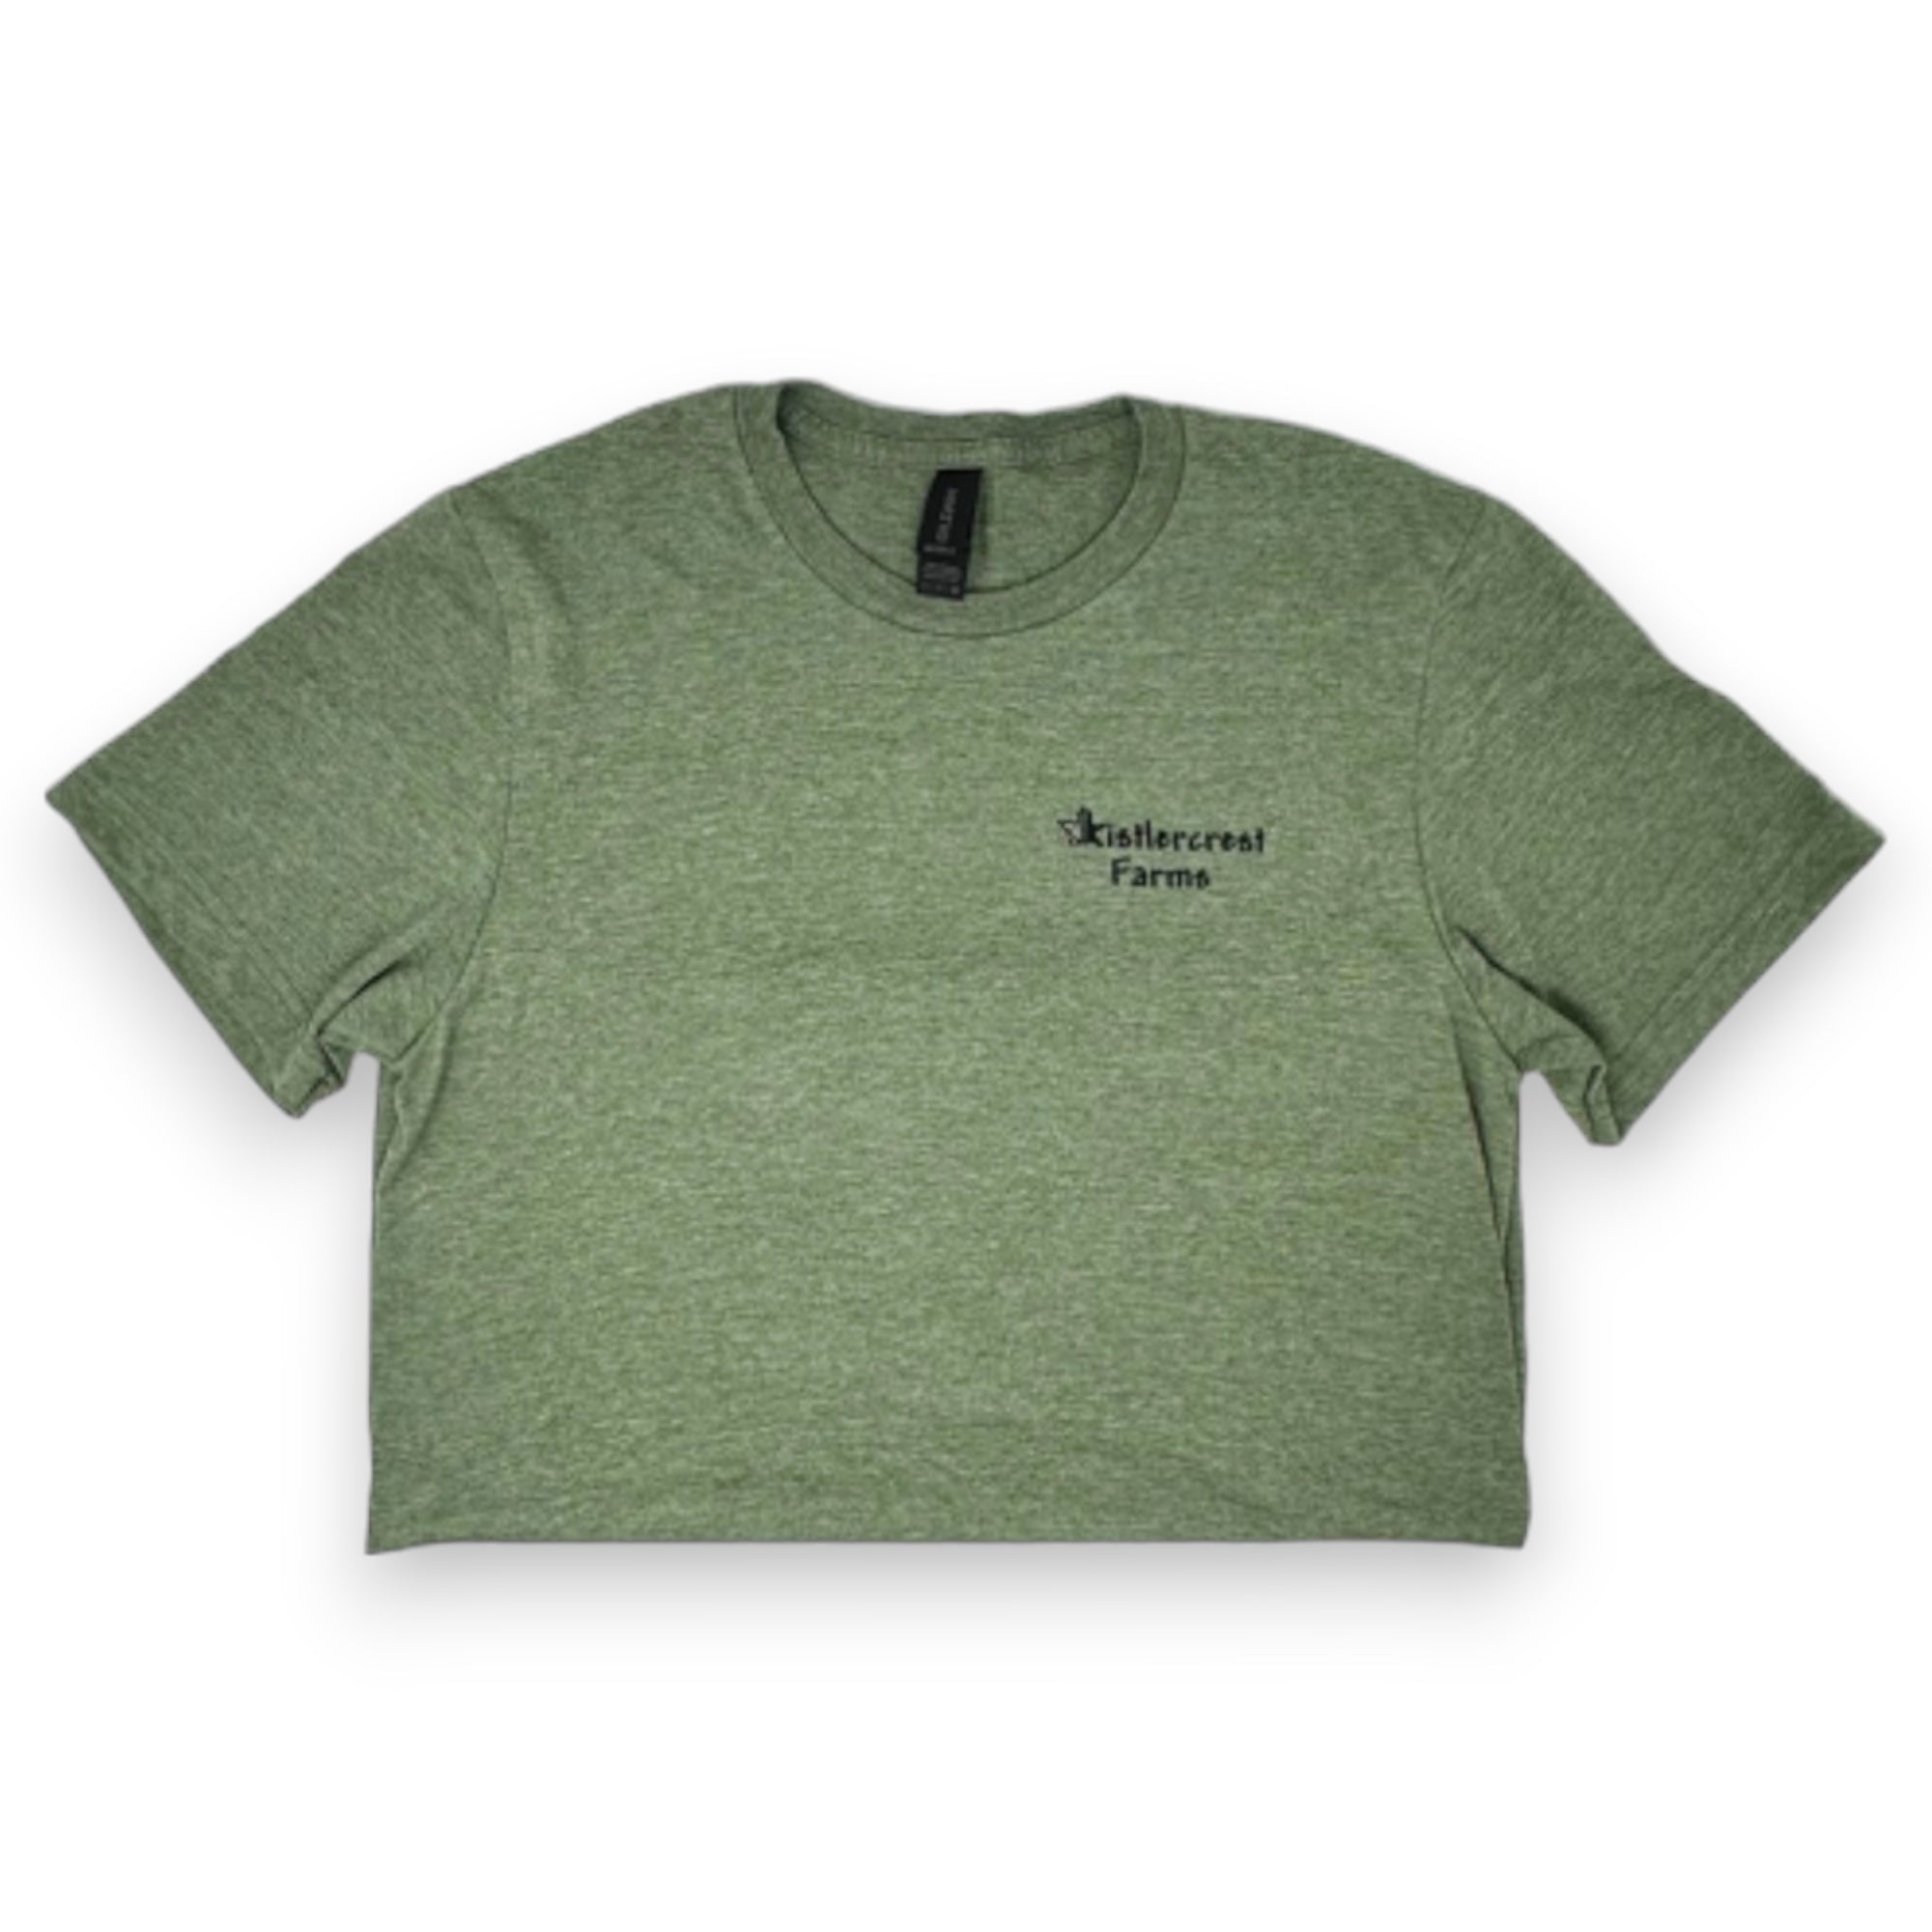 "I'd Tap That" Kistlercrest Farm Unisex T-shirt